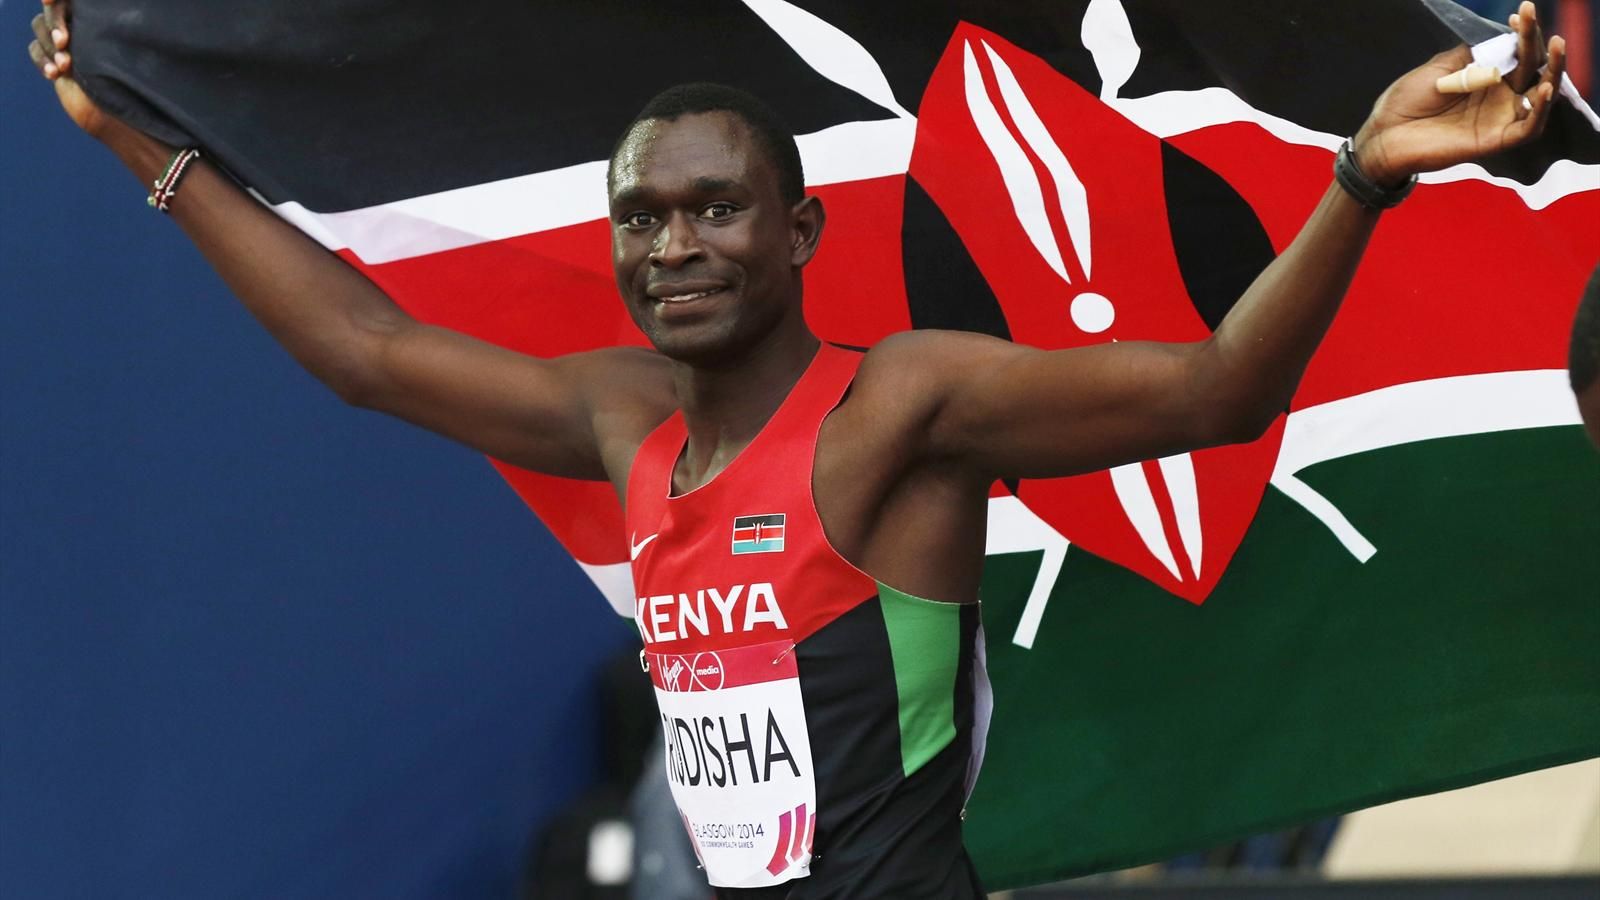 World Athletics boss salutes Kenya